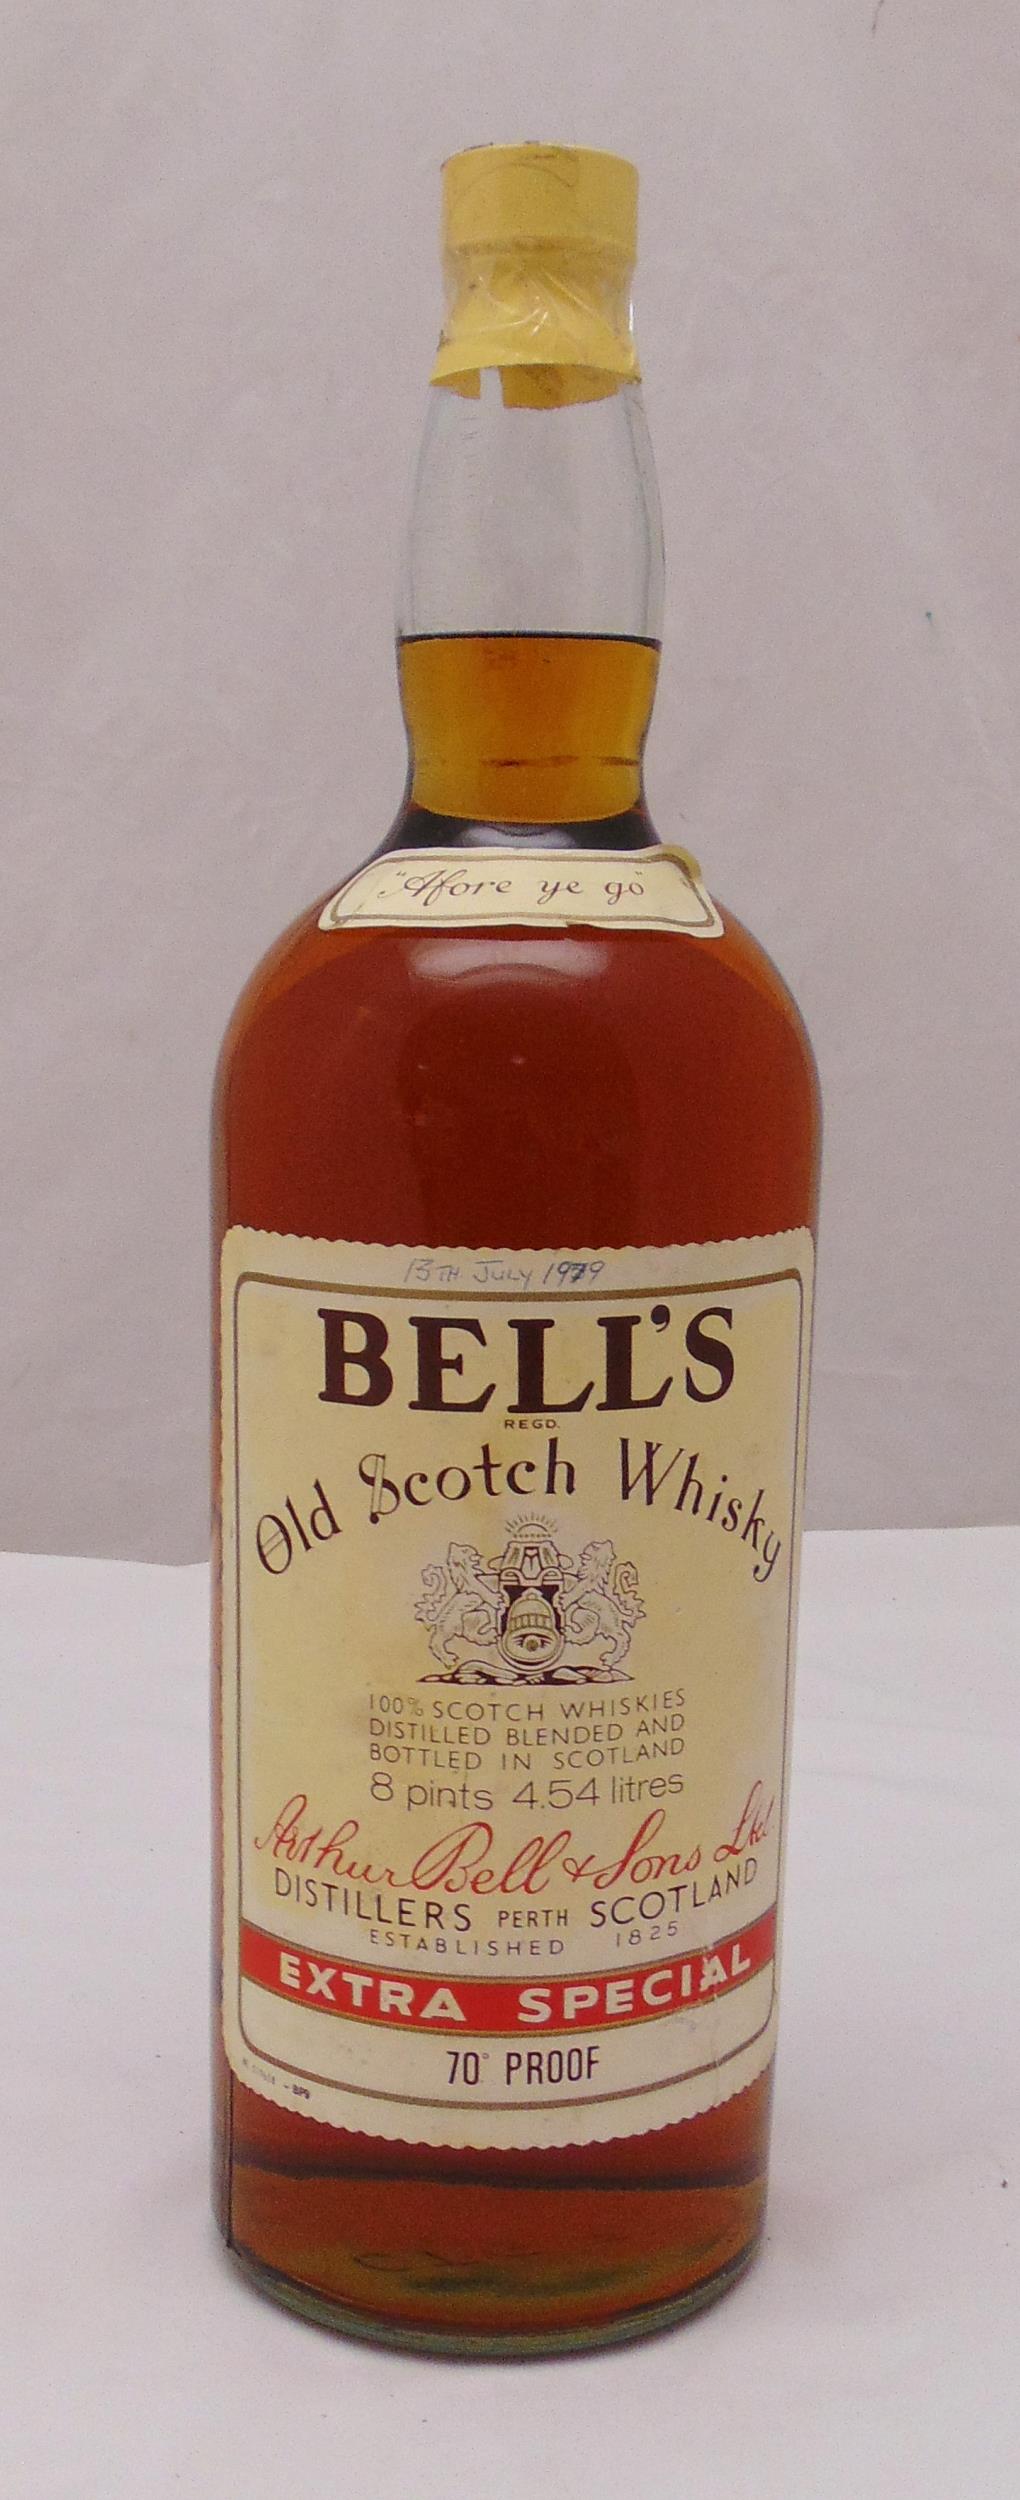 Bells Extra Special 4.54 litre 70 proof 1970s bottling